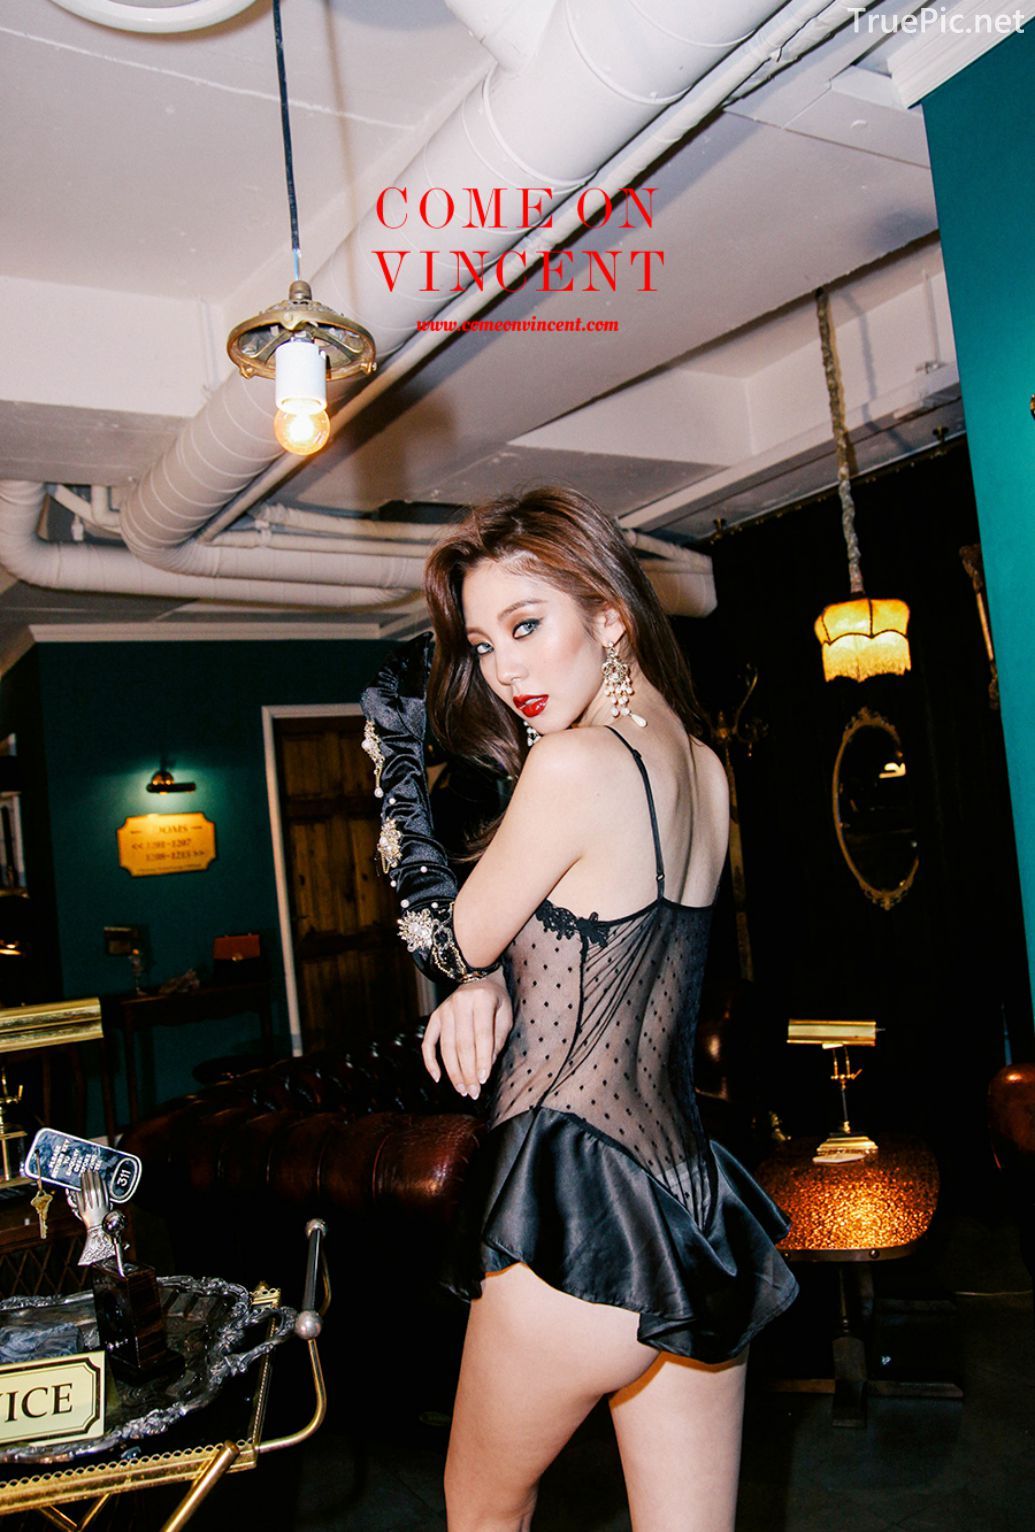 Lee Chae Eun - Korean Lingerie Model - Love Me More Sexy - TruePic.net - Picture 16